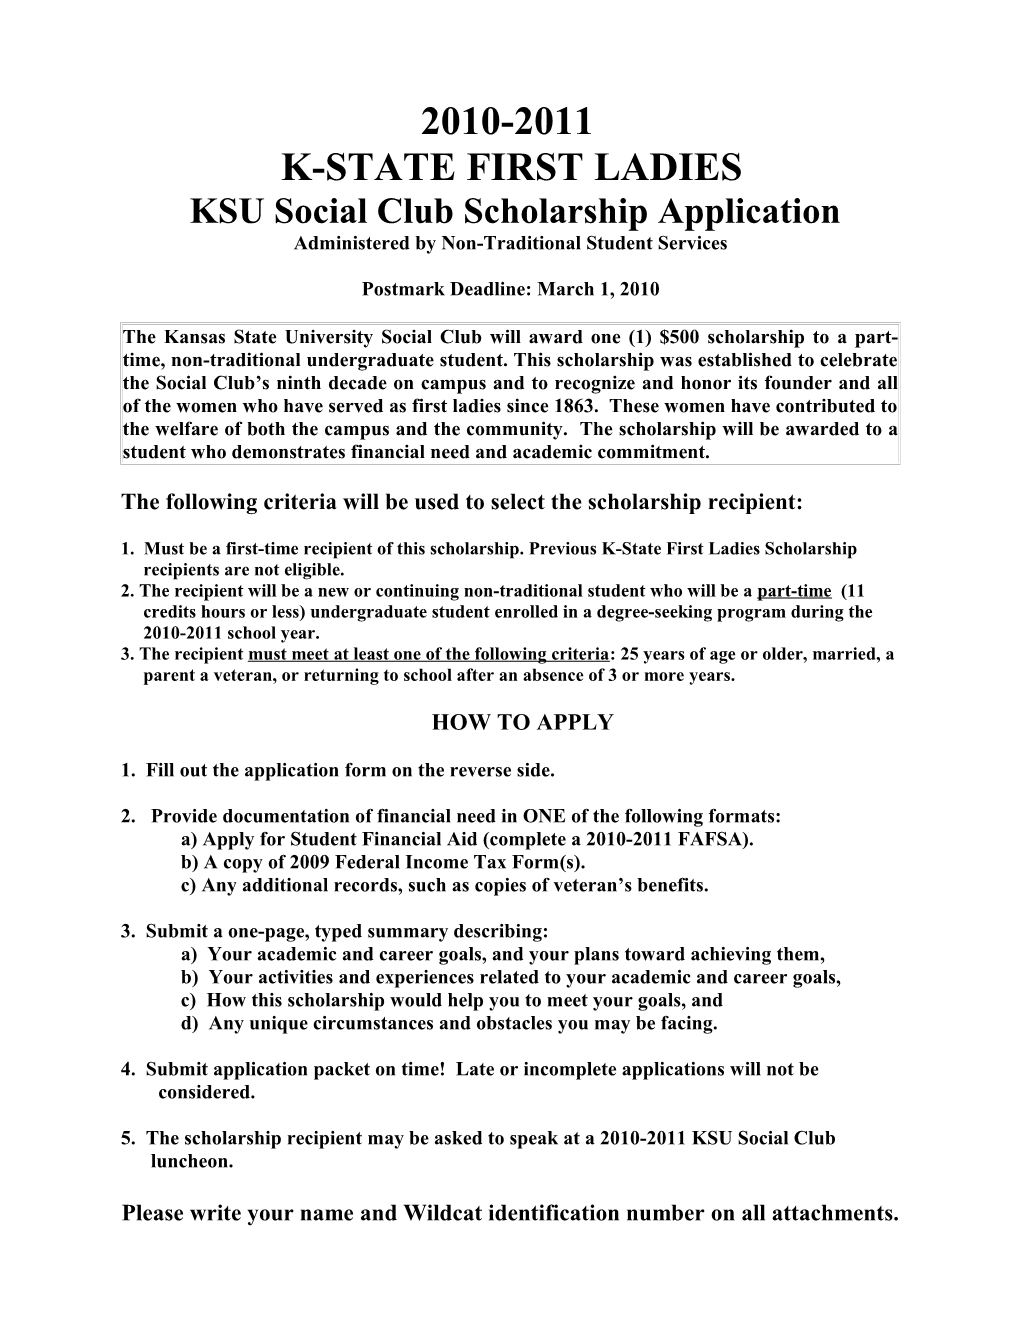 KSU Social Club Scholarship Application